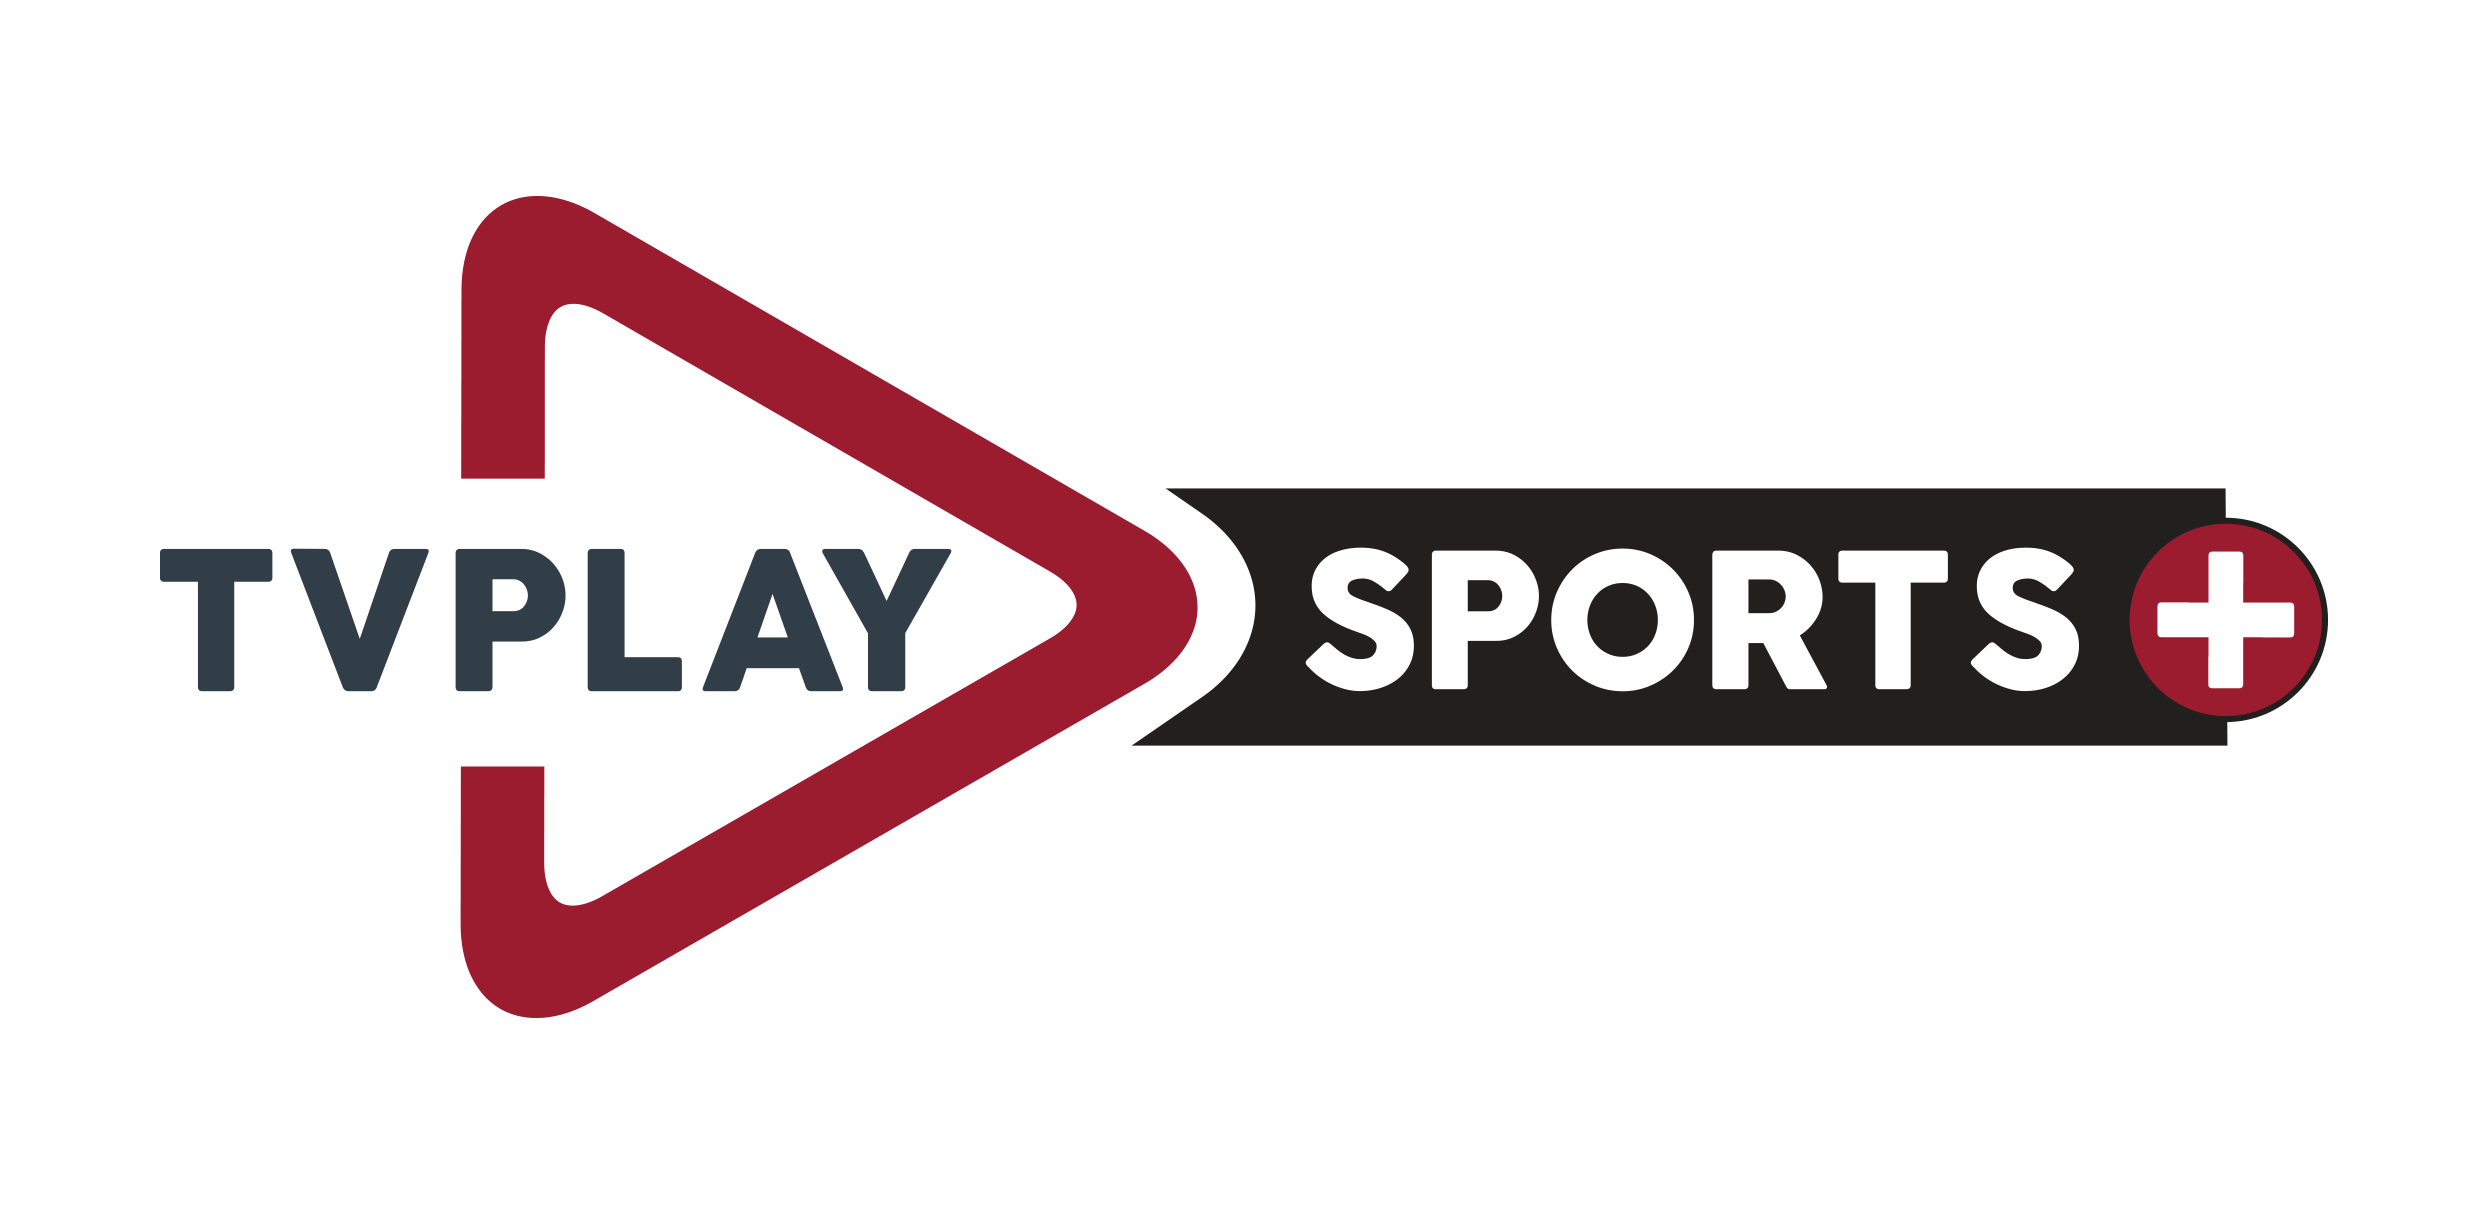 Sport3 tv. TVPLAY Sports Телеканал. Логотипы спортивных каналов. Sport TV лого. Канал спортивный HD логотип.